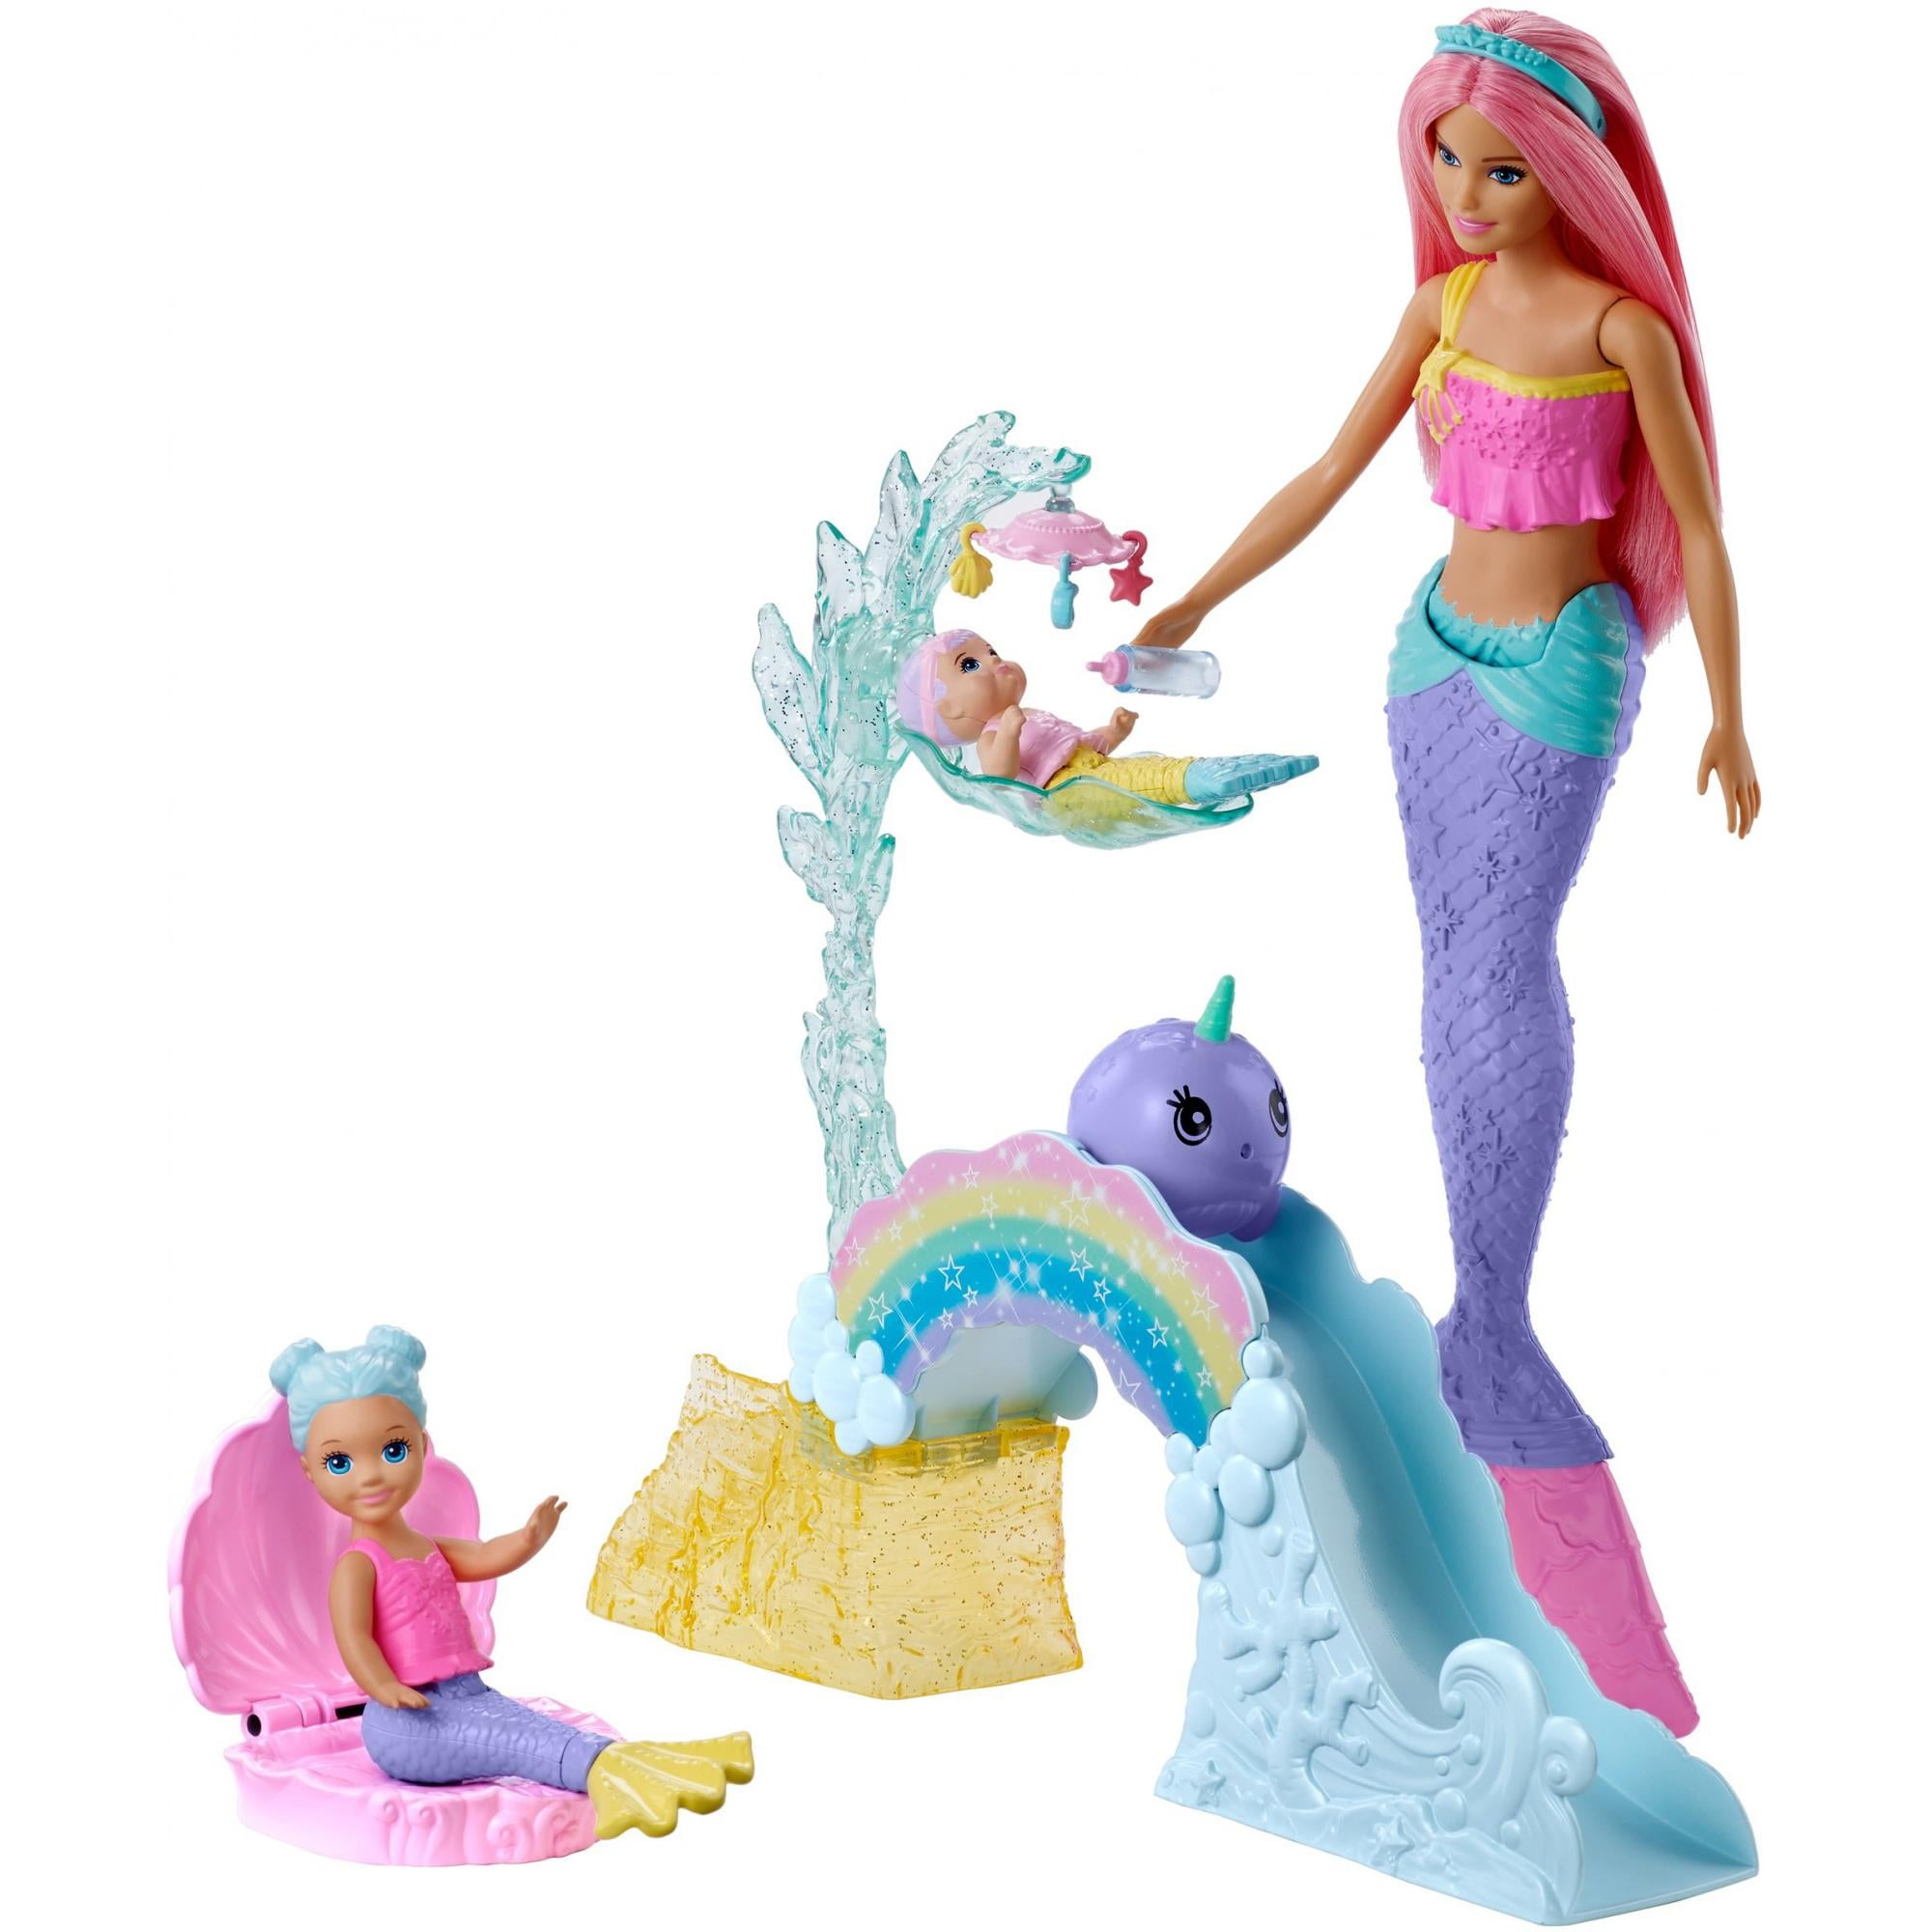 Familiar Beginner Shipley Barbie Dreamtopia Mermaid Doll, Mertoddler & Merbaby Playset - Walmart.com